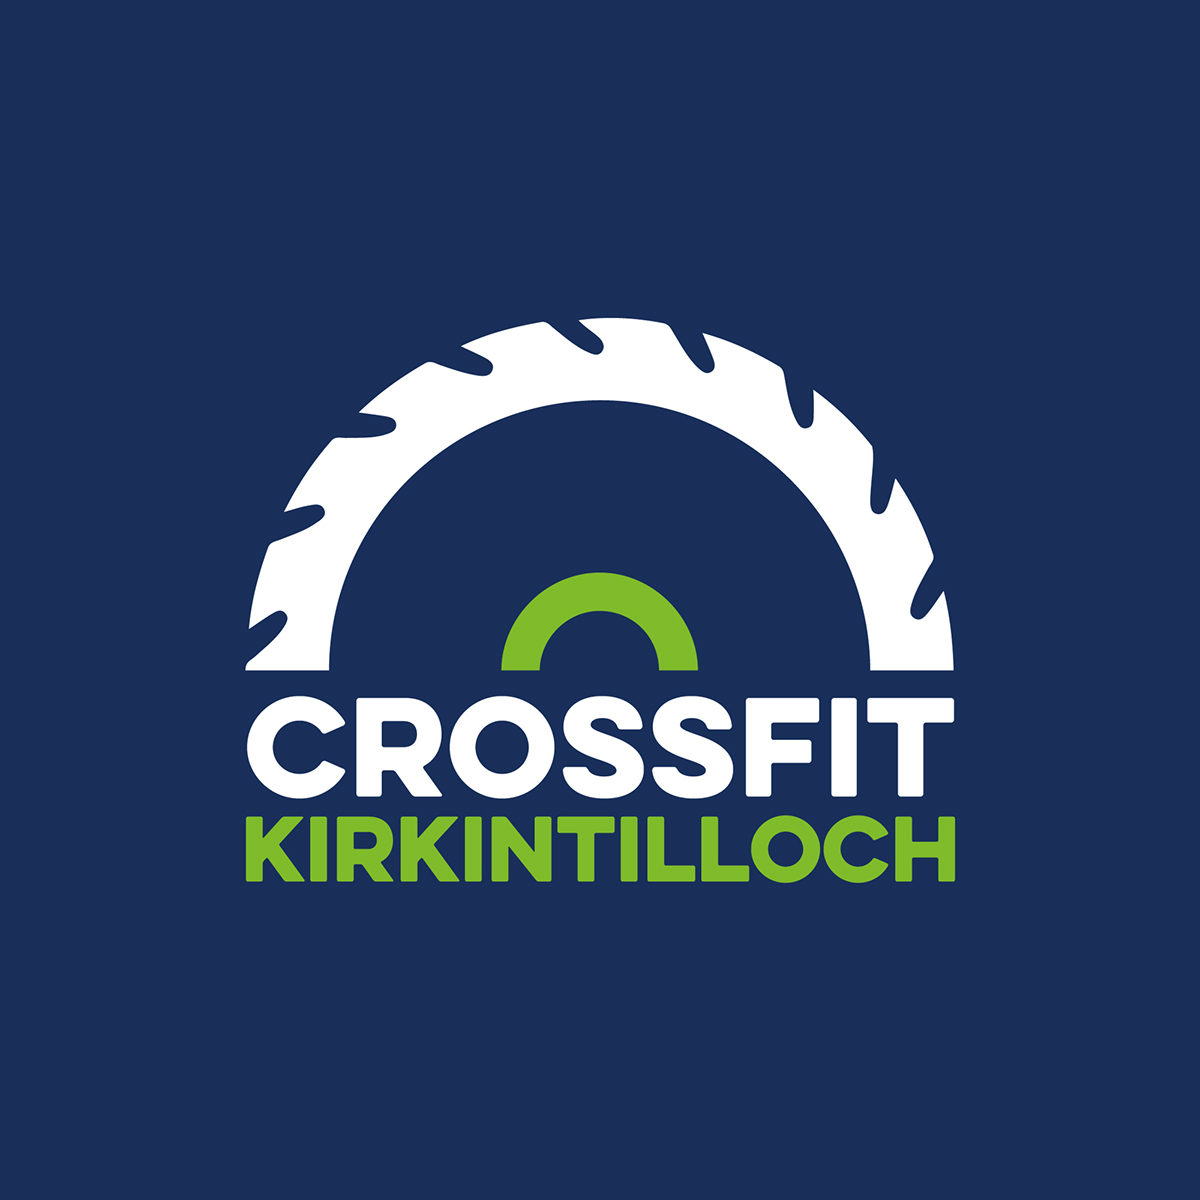 Crossfit Kirkinitlloch Crossfit logo Logotype gym andy scotland Alan Wilson Andrew Rae commonwealth weightlifter fitness